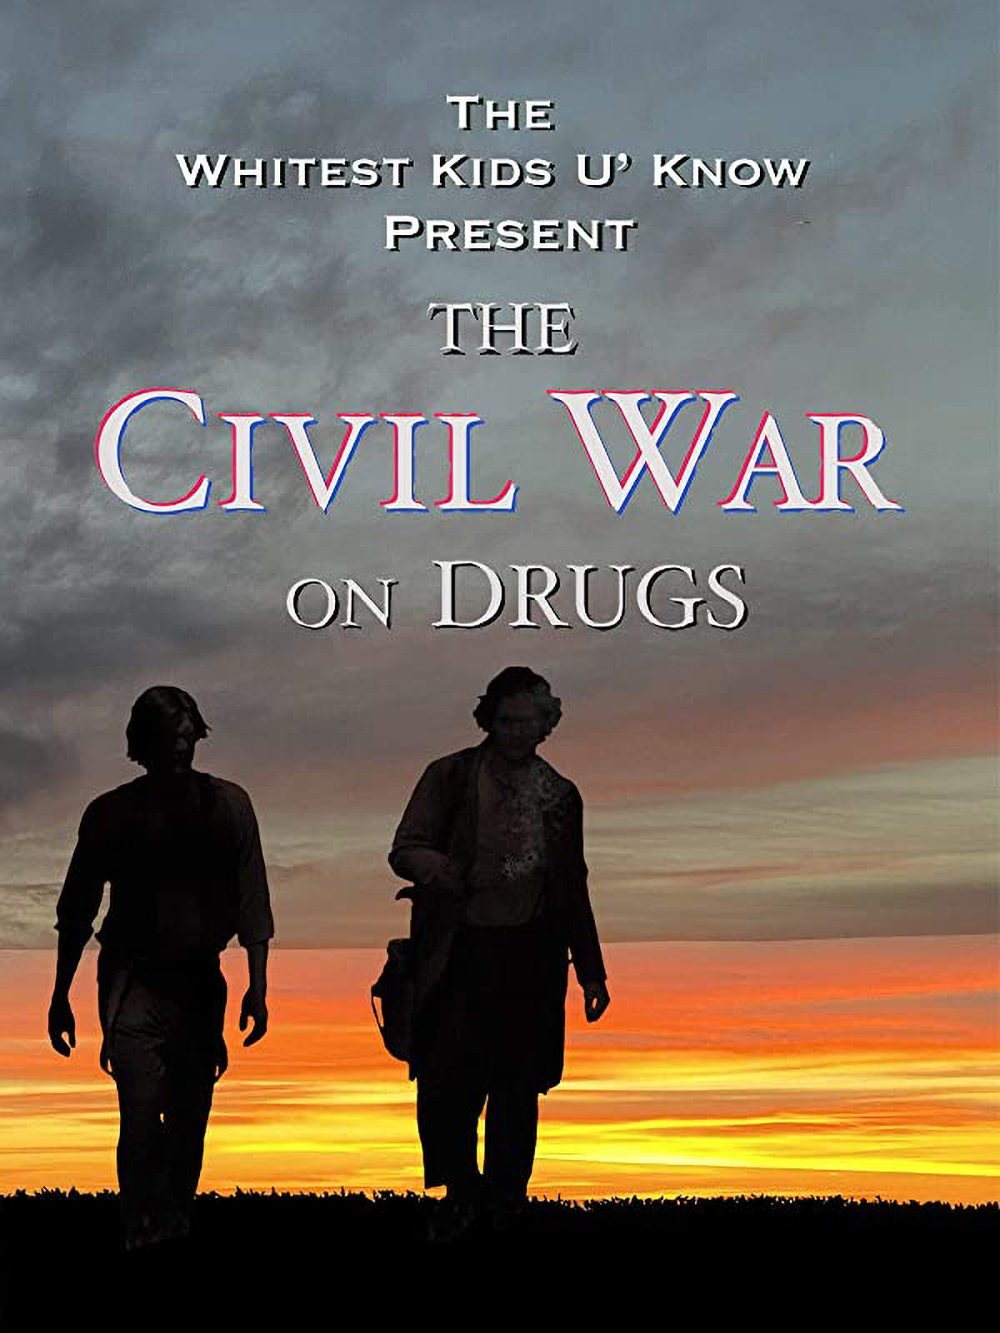 The Civil War on Drugs